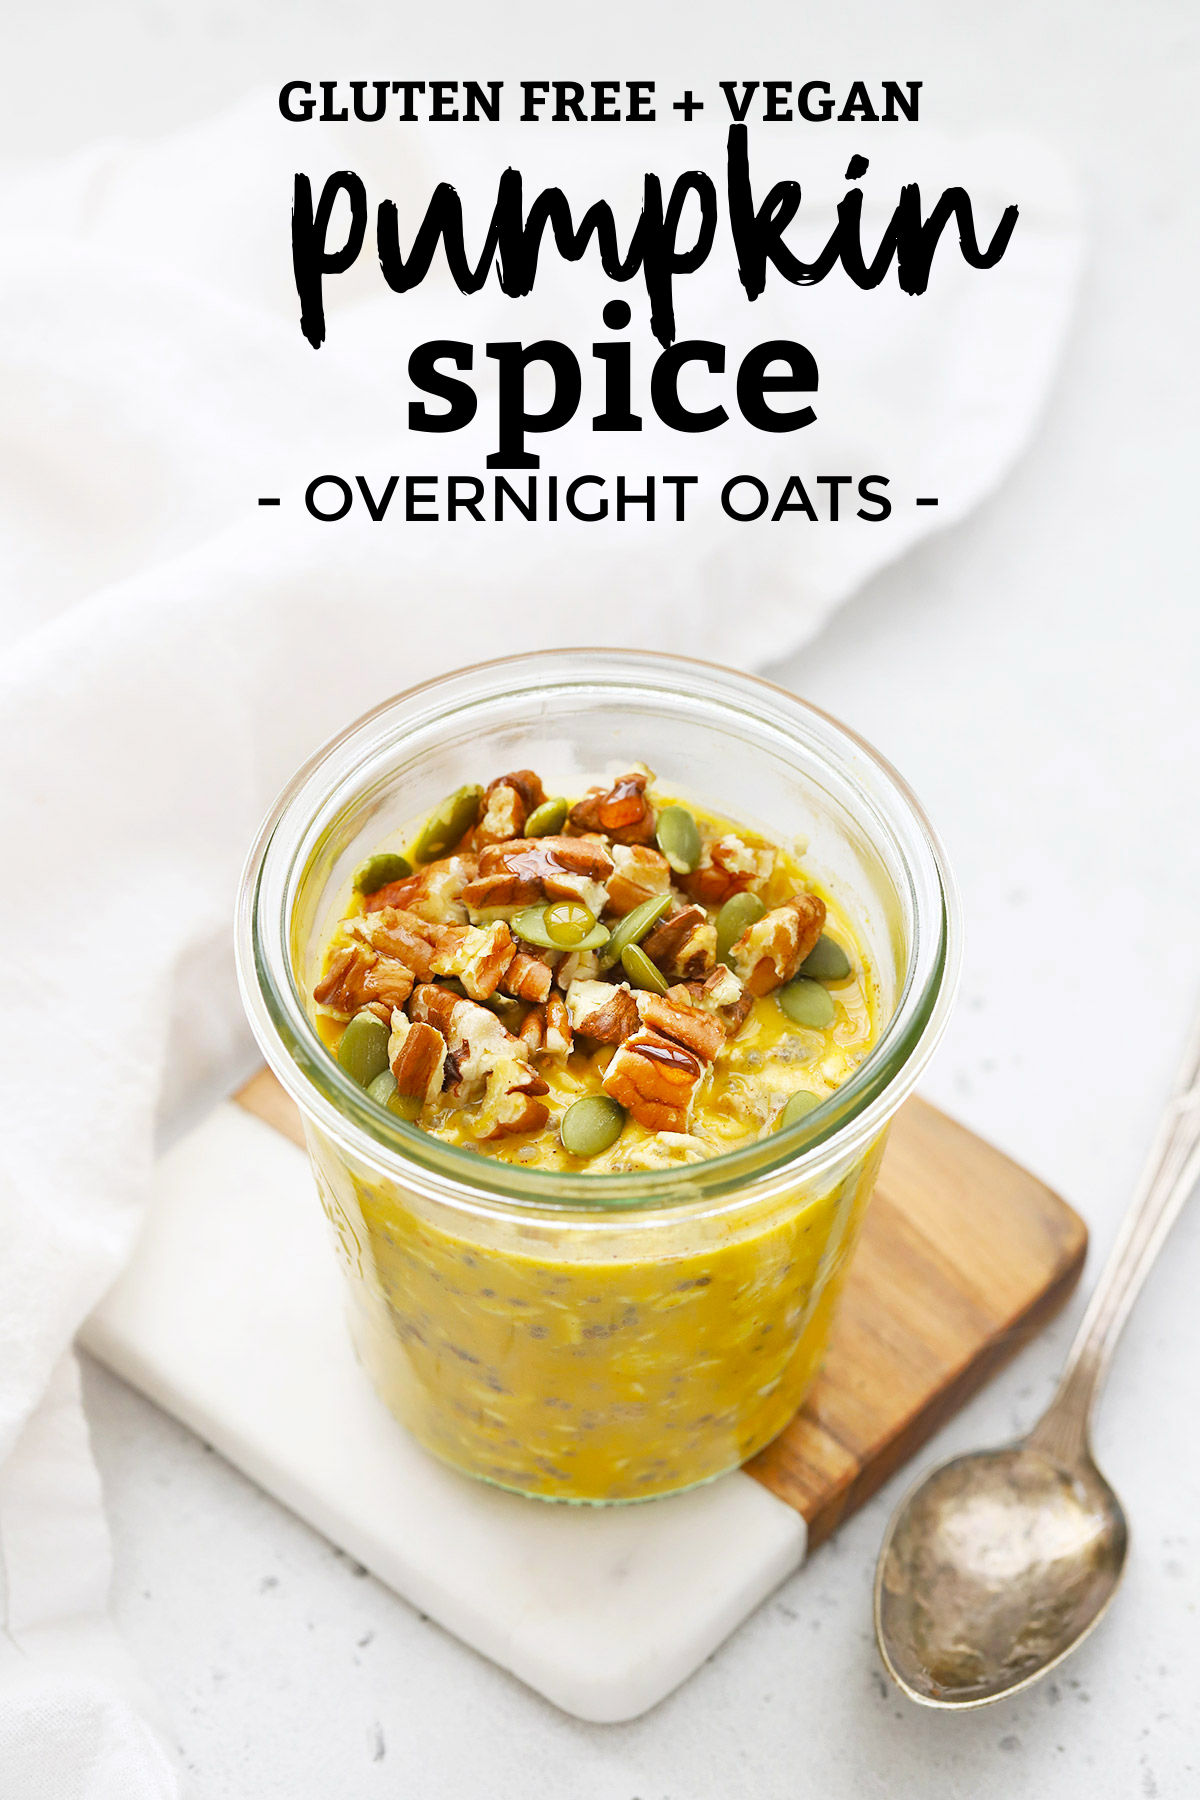 Jar of pumpkin overnight oats topped with pecans and pumpkin seeds with text overlay that reads "gluten-free + vegan Pumpkin spice Overnight Oats"